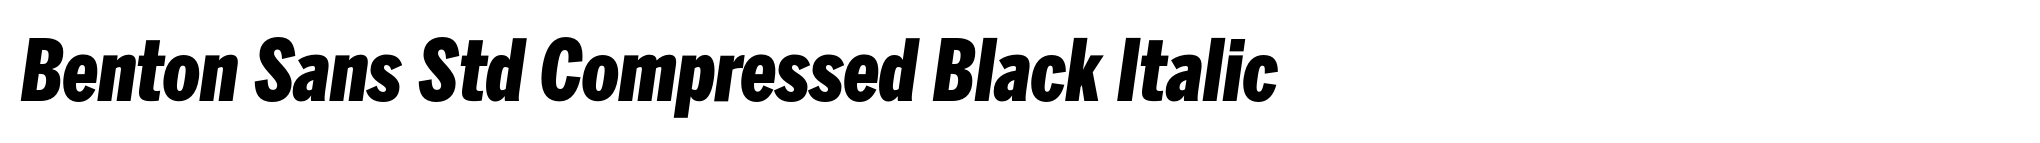 Benton Sans Std Compressed Black Italic image